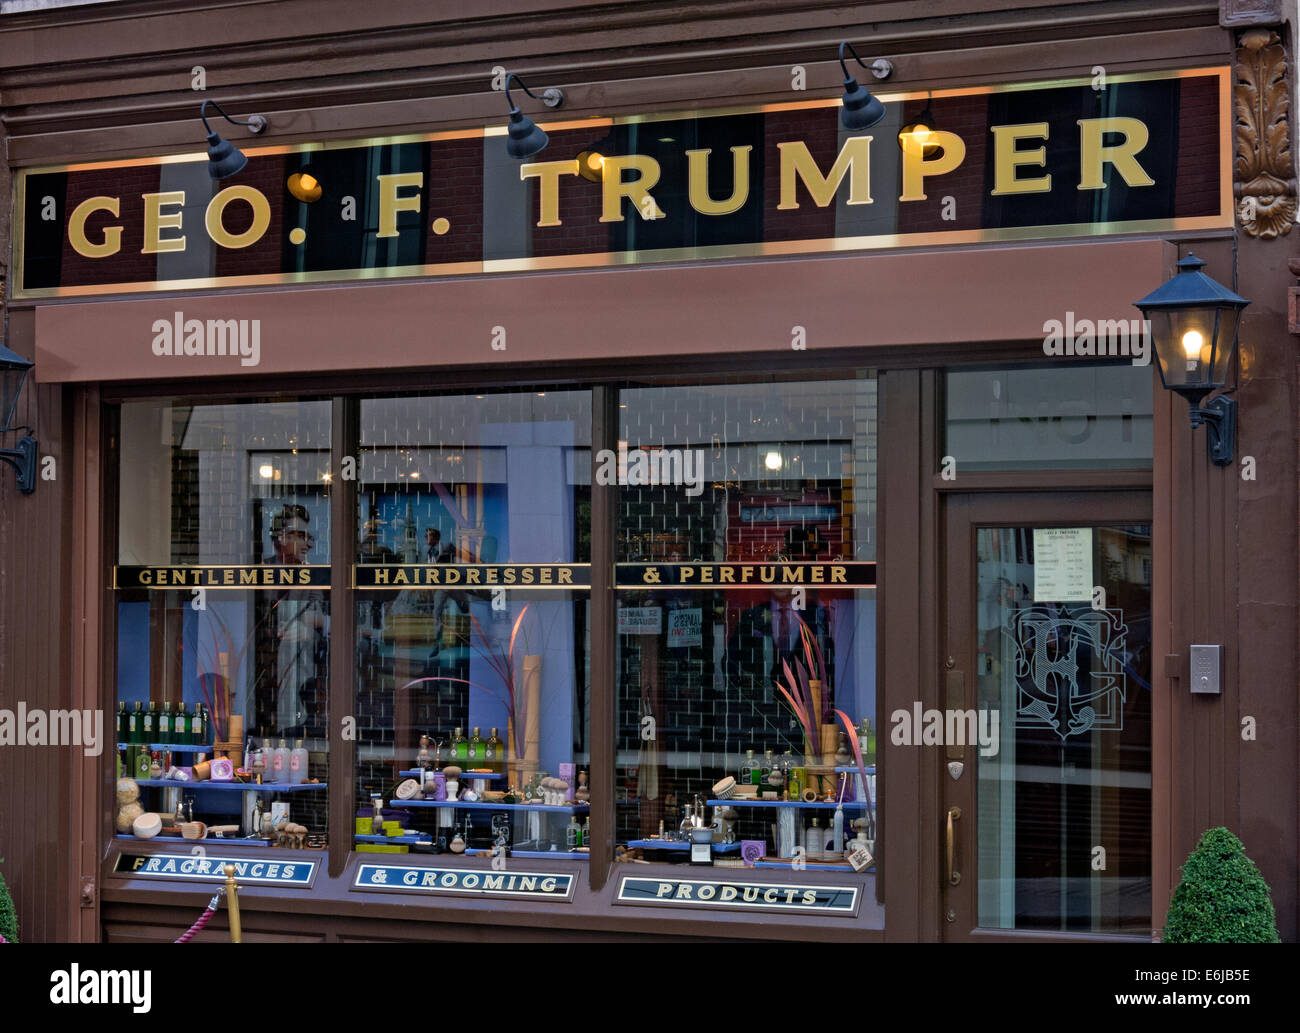 Geo. F. Trumper Gentlemans Barbiere und Parfümeure Shop, Duke of York St, Mayfair, London, England UK Stockfoto